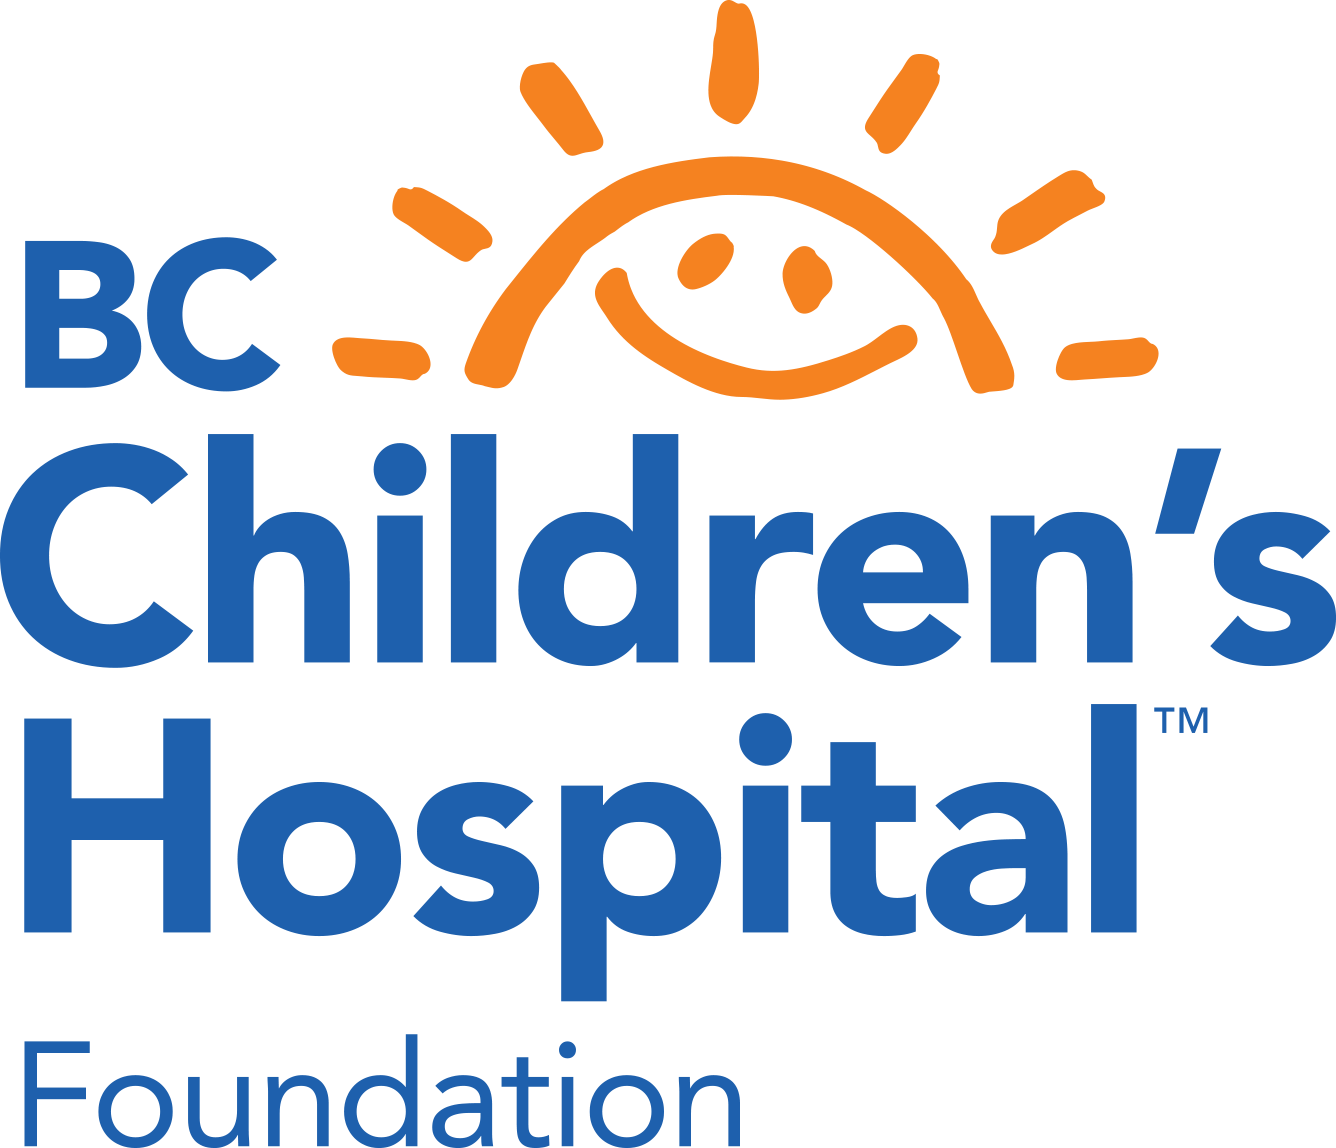 BC Children's Hospital Foundation